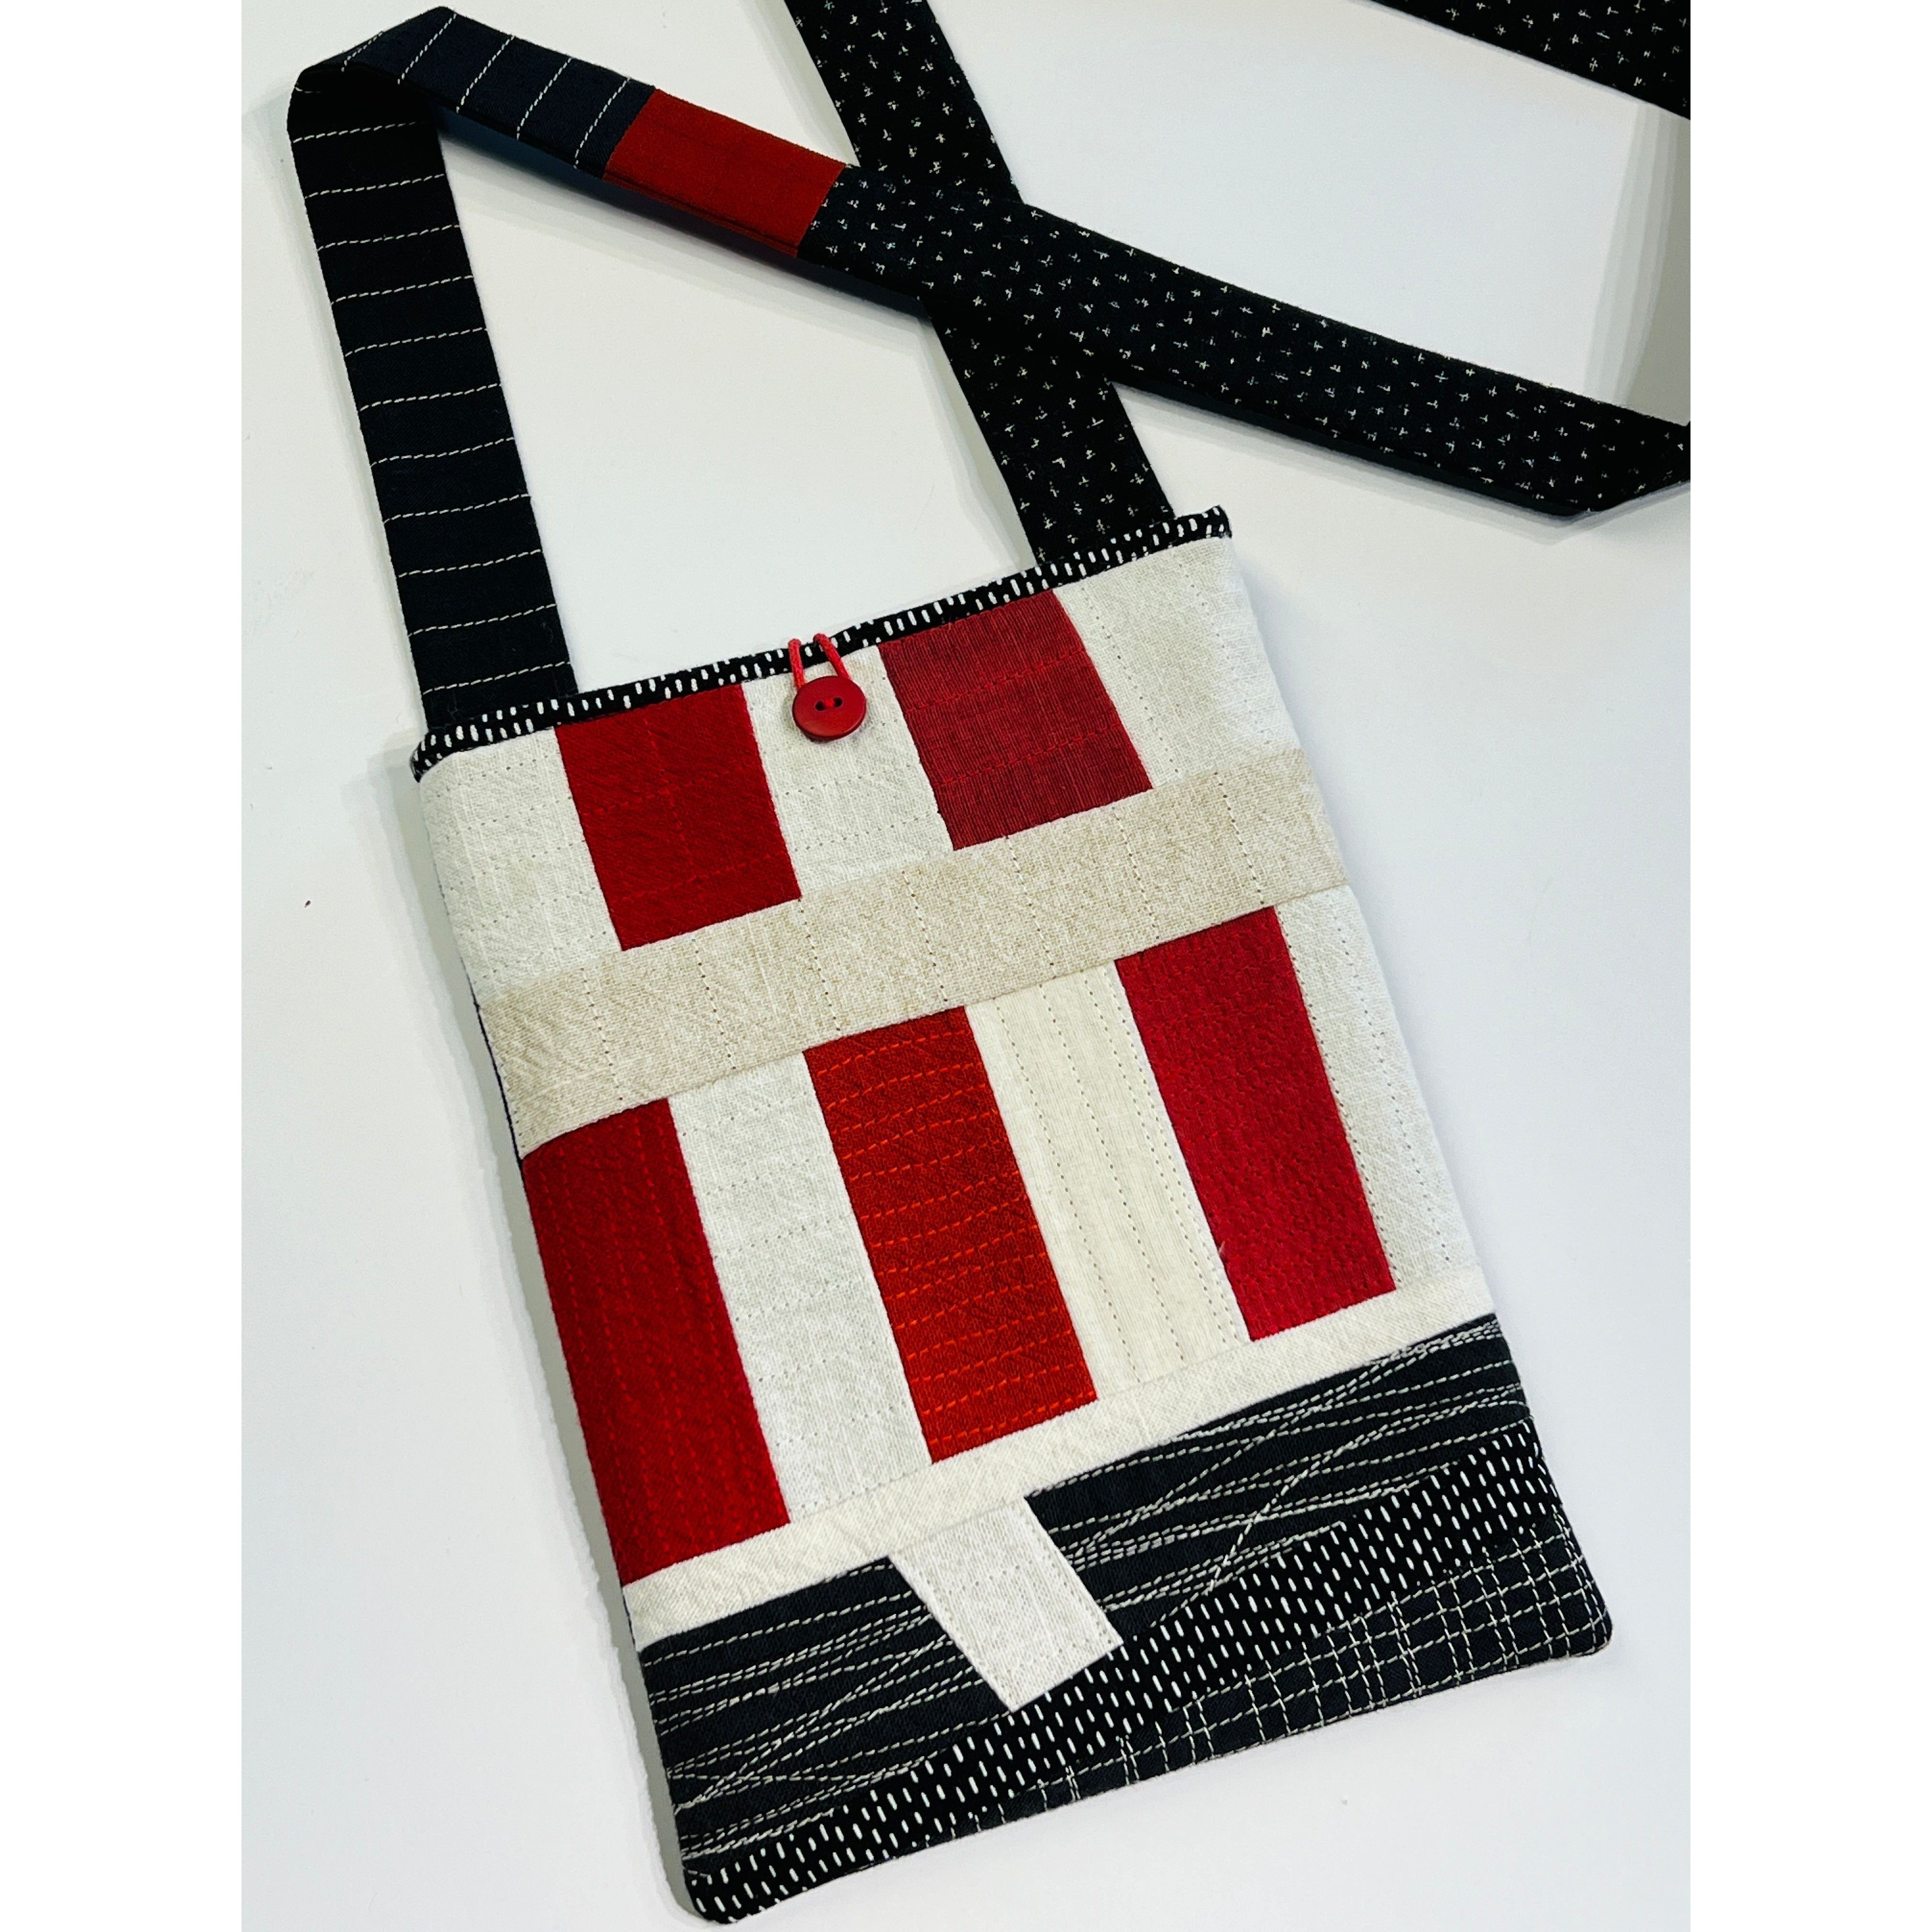 Juanita Girardin Small Bag, Pieced Japanese Cotton, Red Bands